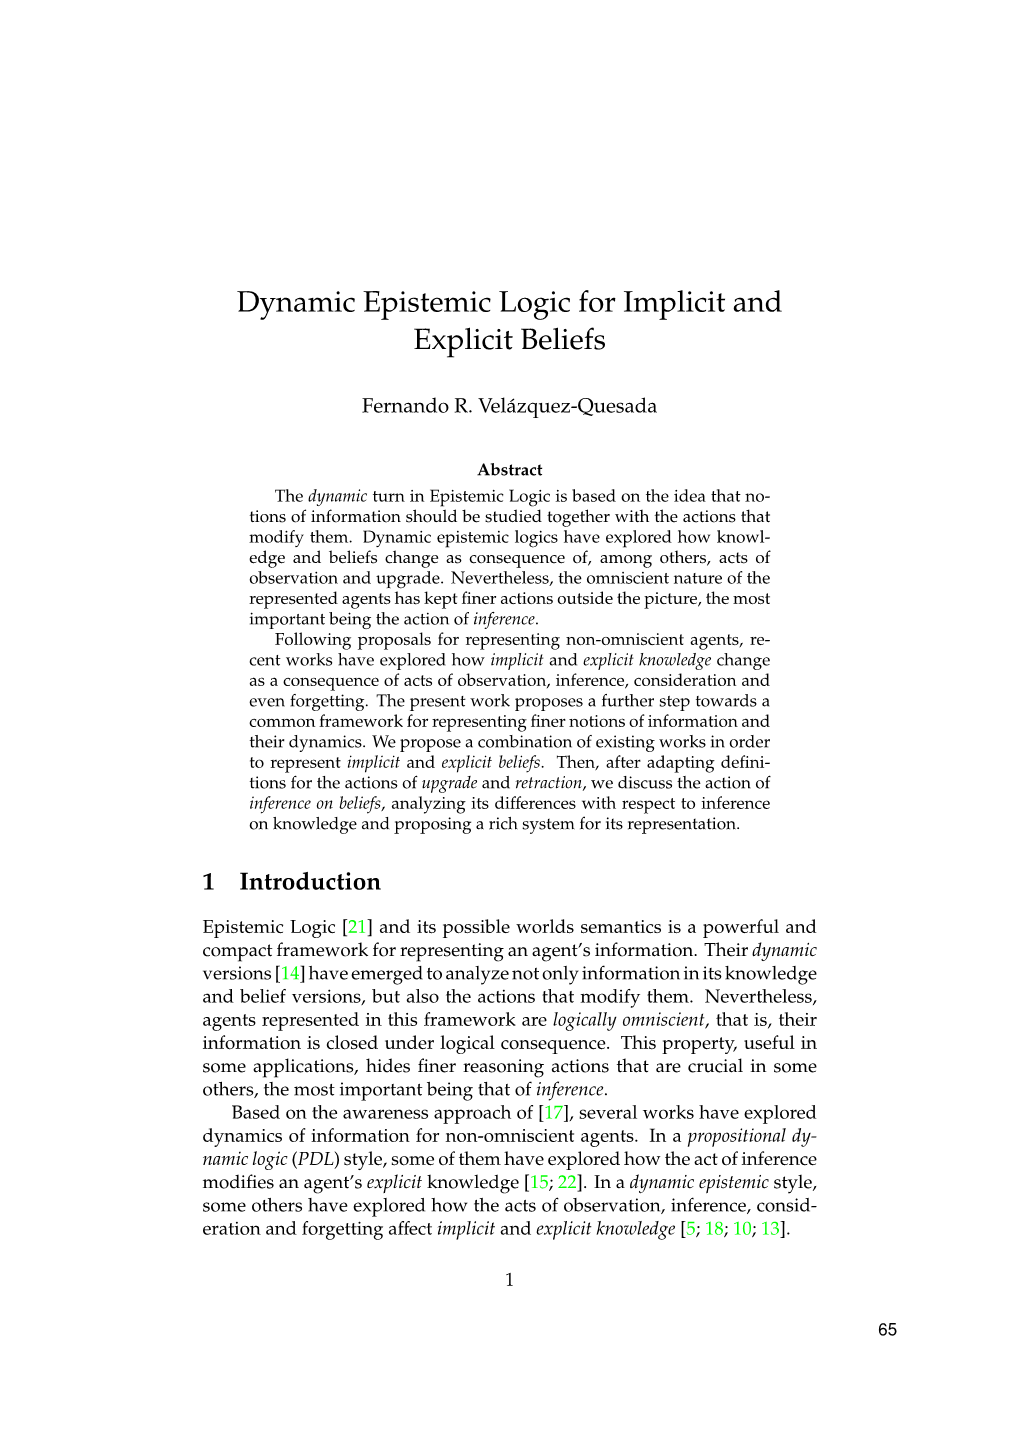 Dynamic Epistemic Logic for Implicit and Explicit Beliefs